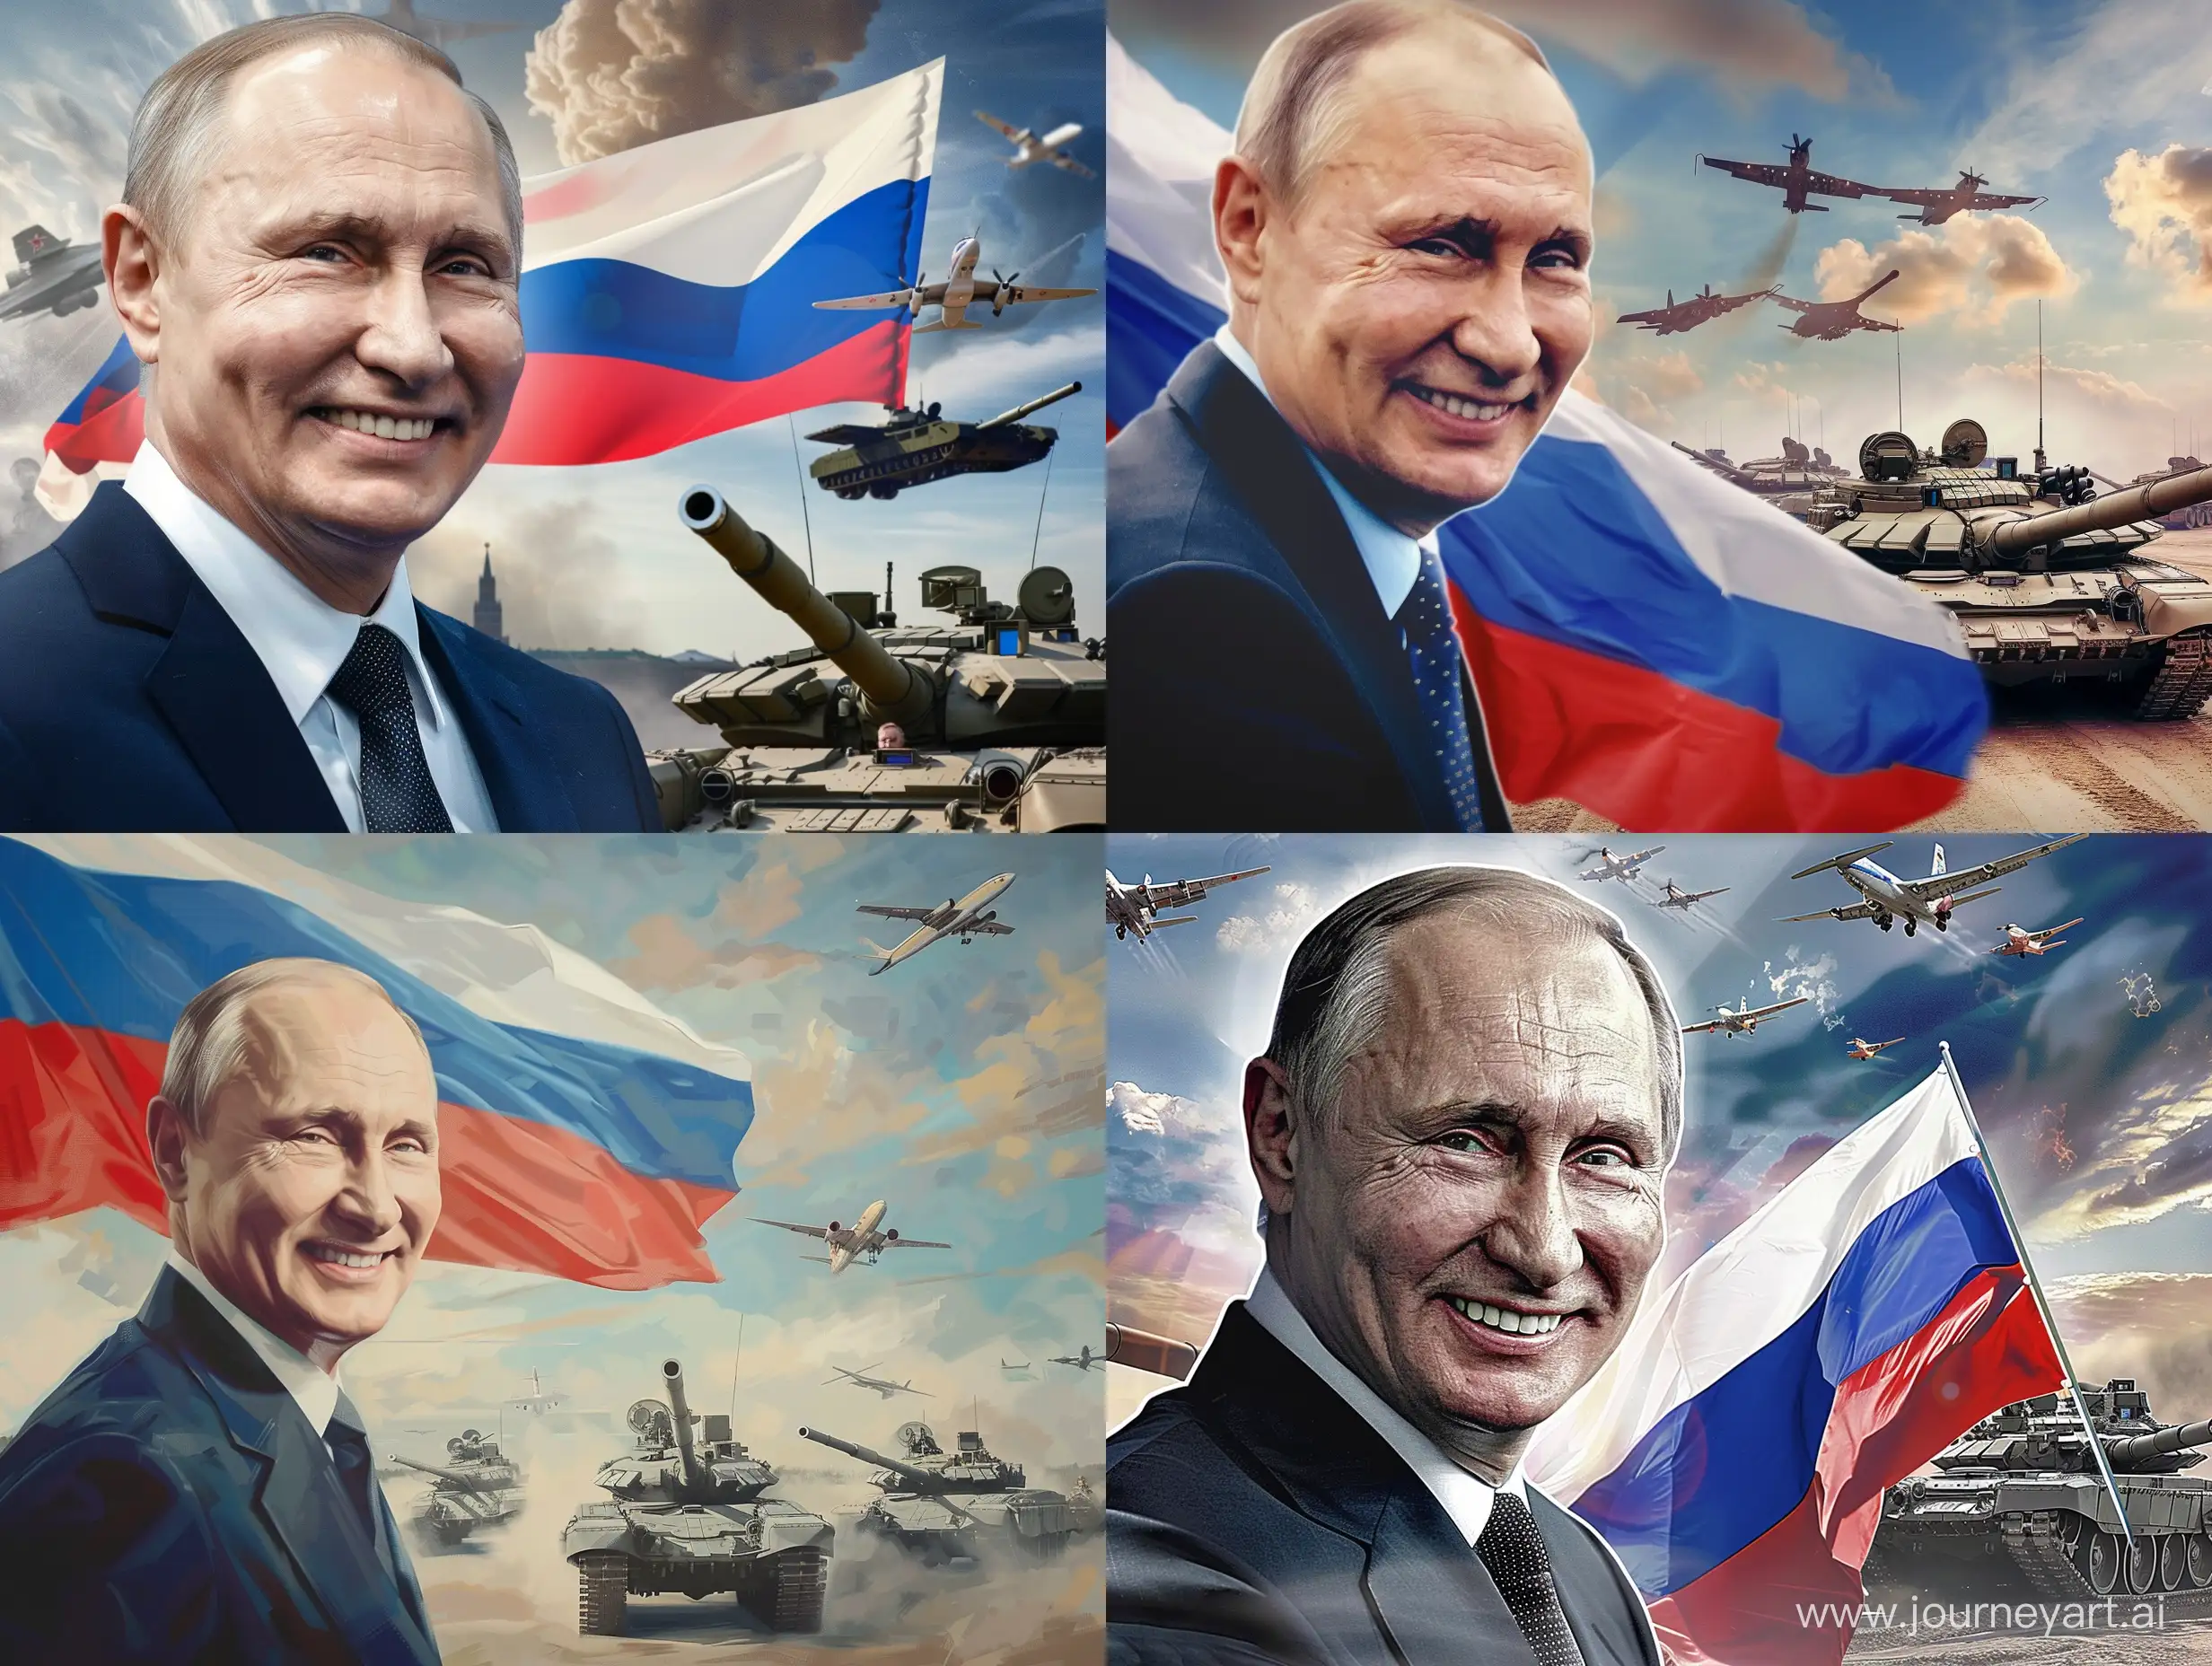 Vladimir-Putin-Smiles-with-Russian-Flag-and-Military-Display